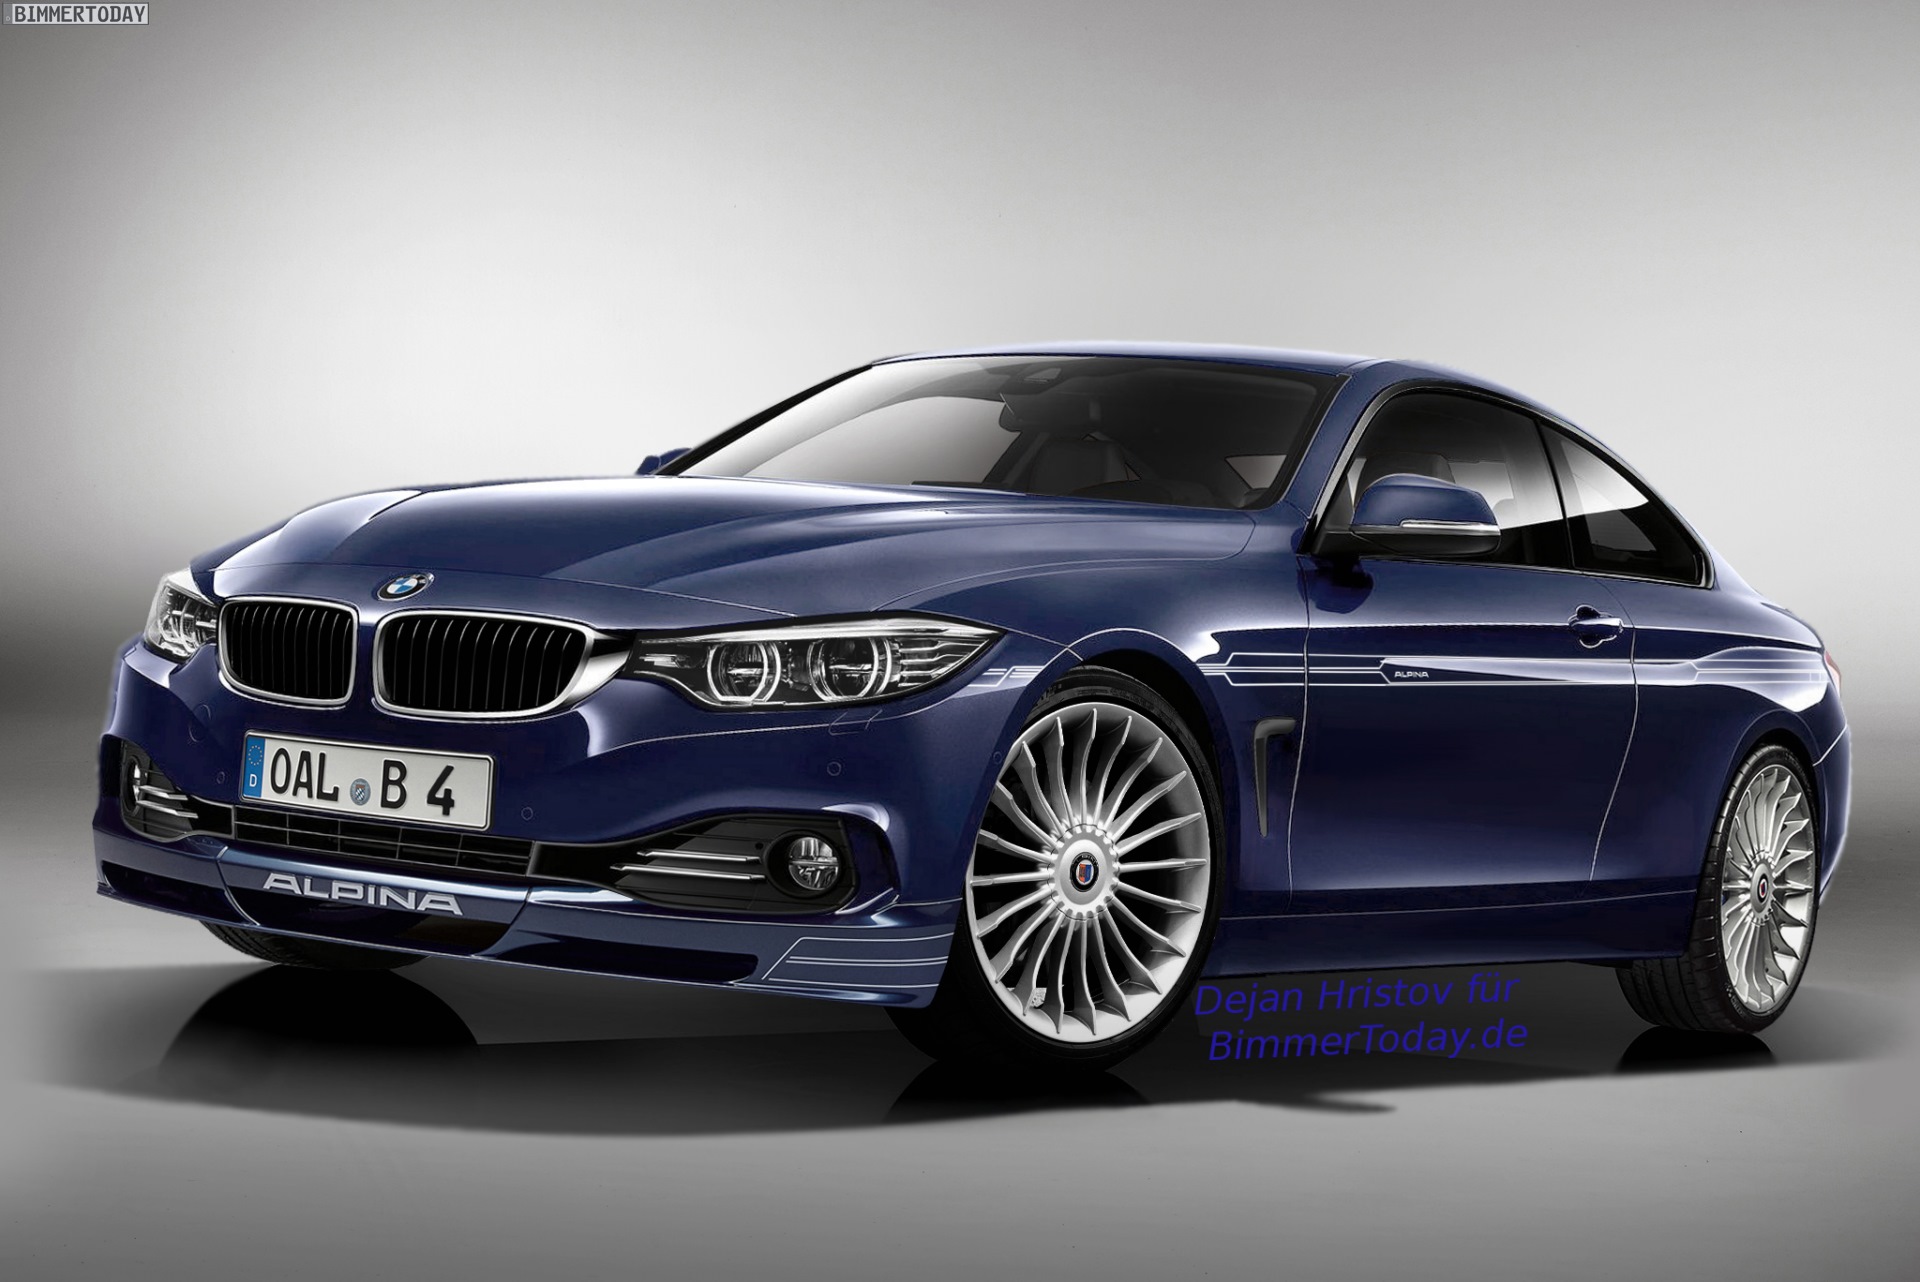 2014 BMW Alpina B4 HD wallpapers, Desktop wallpaper - most viewed